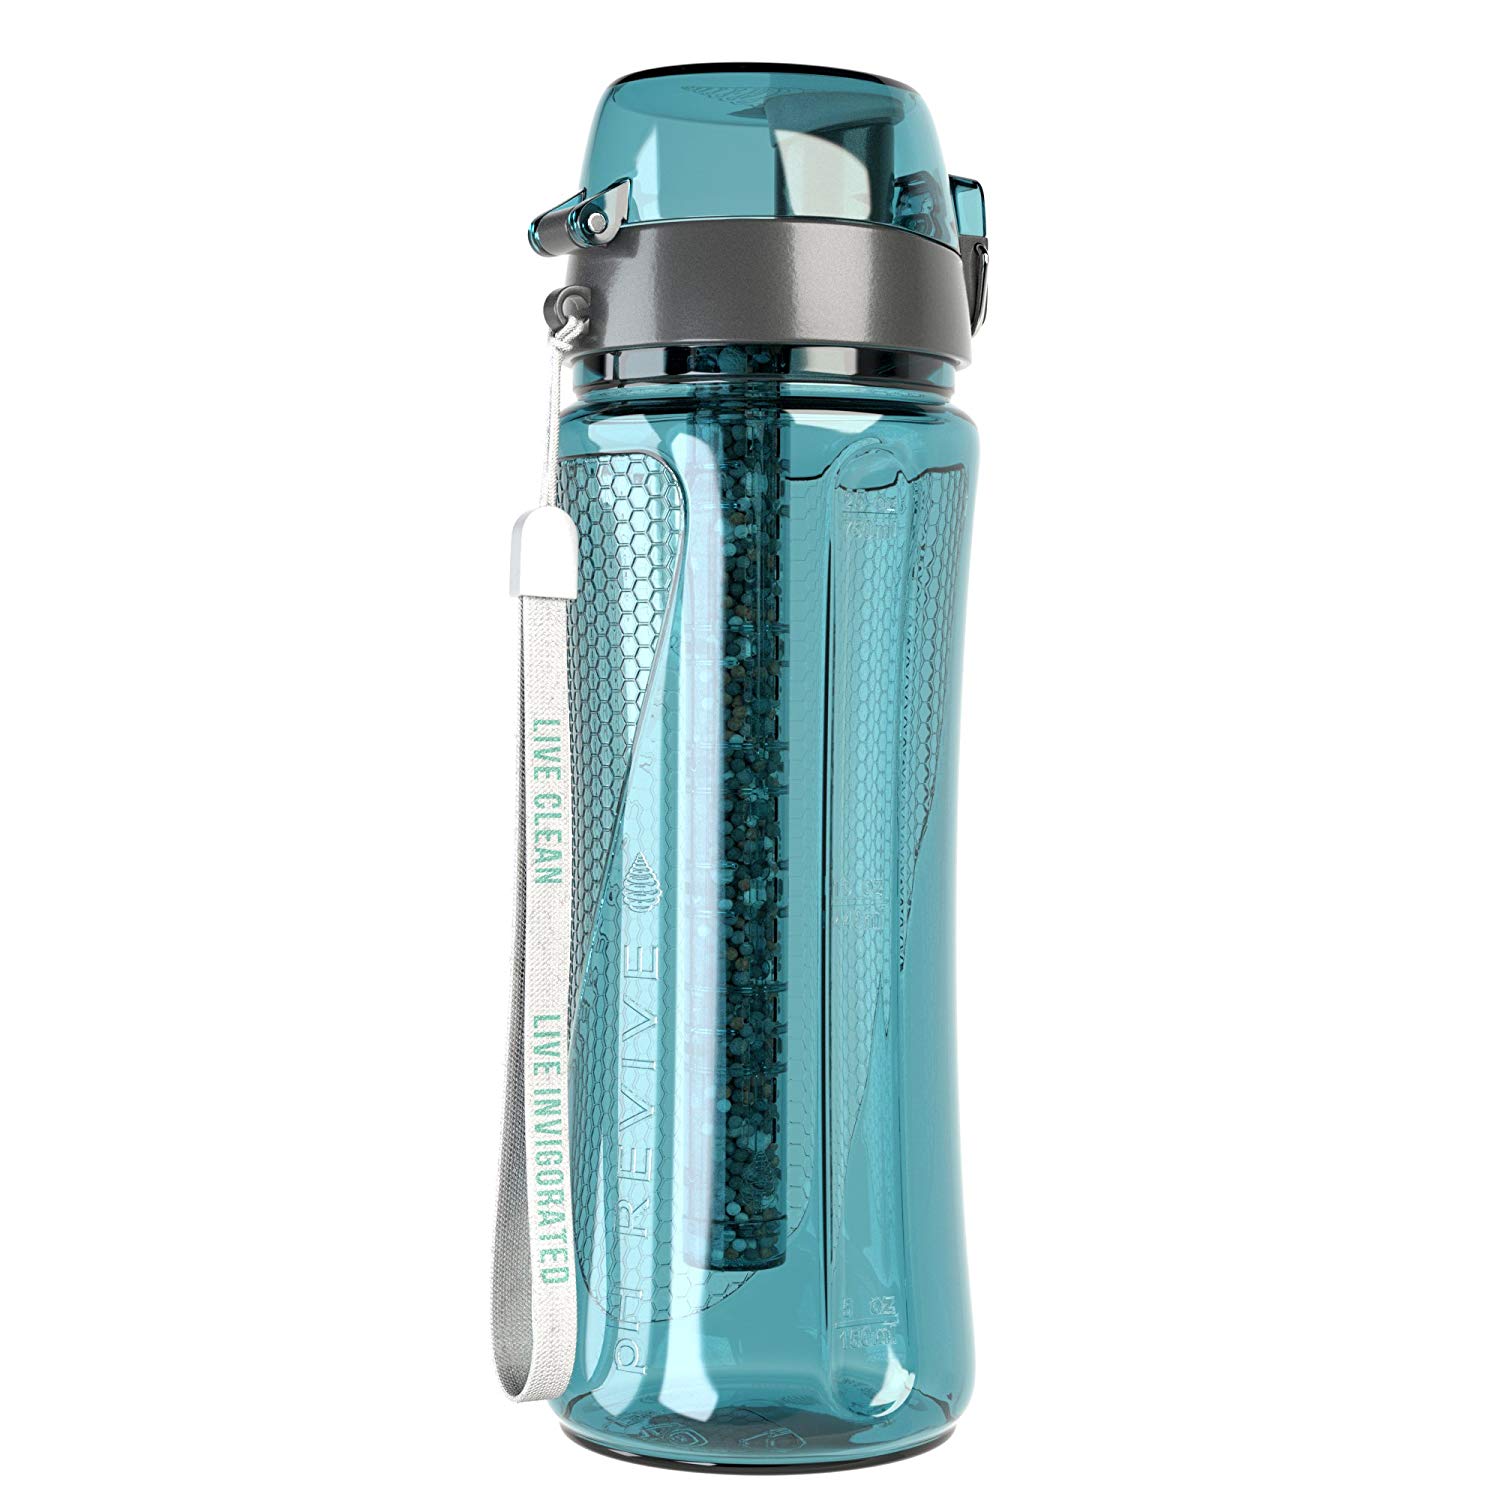 pH REVIVE Alkaline Water Bottle & Carry Case – Alkaline Water Filter - Water bottle with Filter